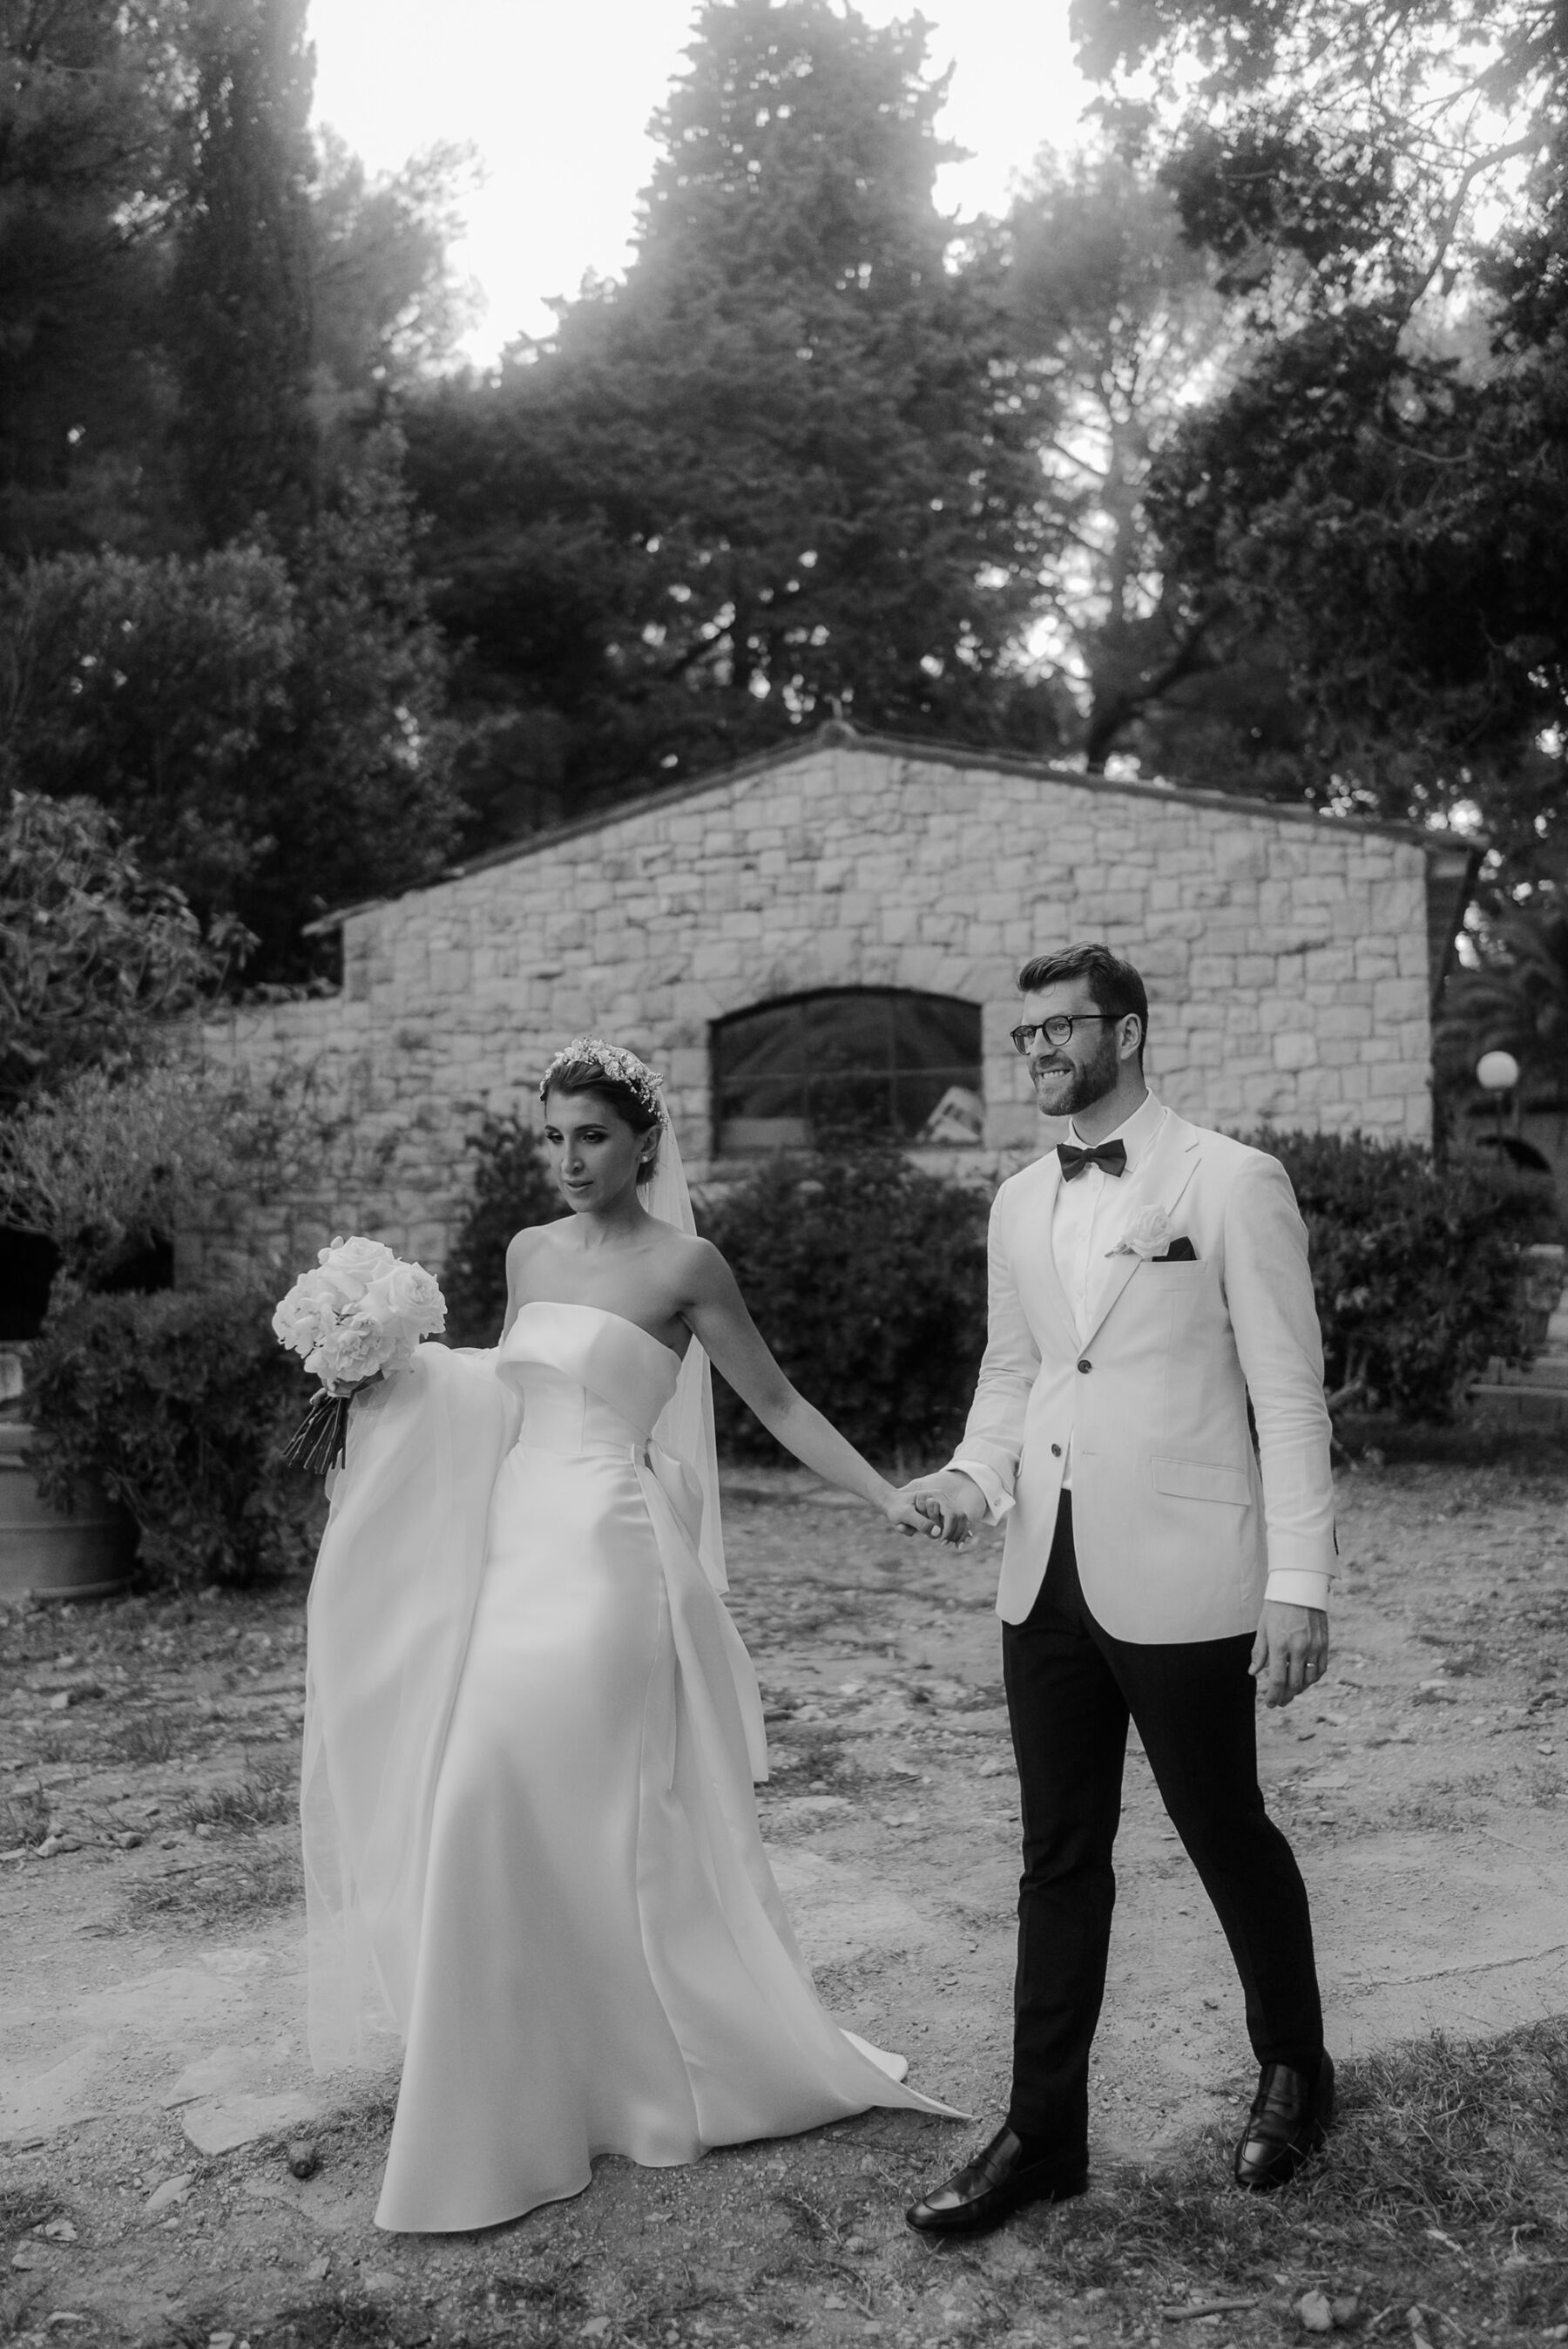 Contemporary and minimalist Eva Lendel wedding dress